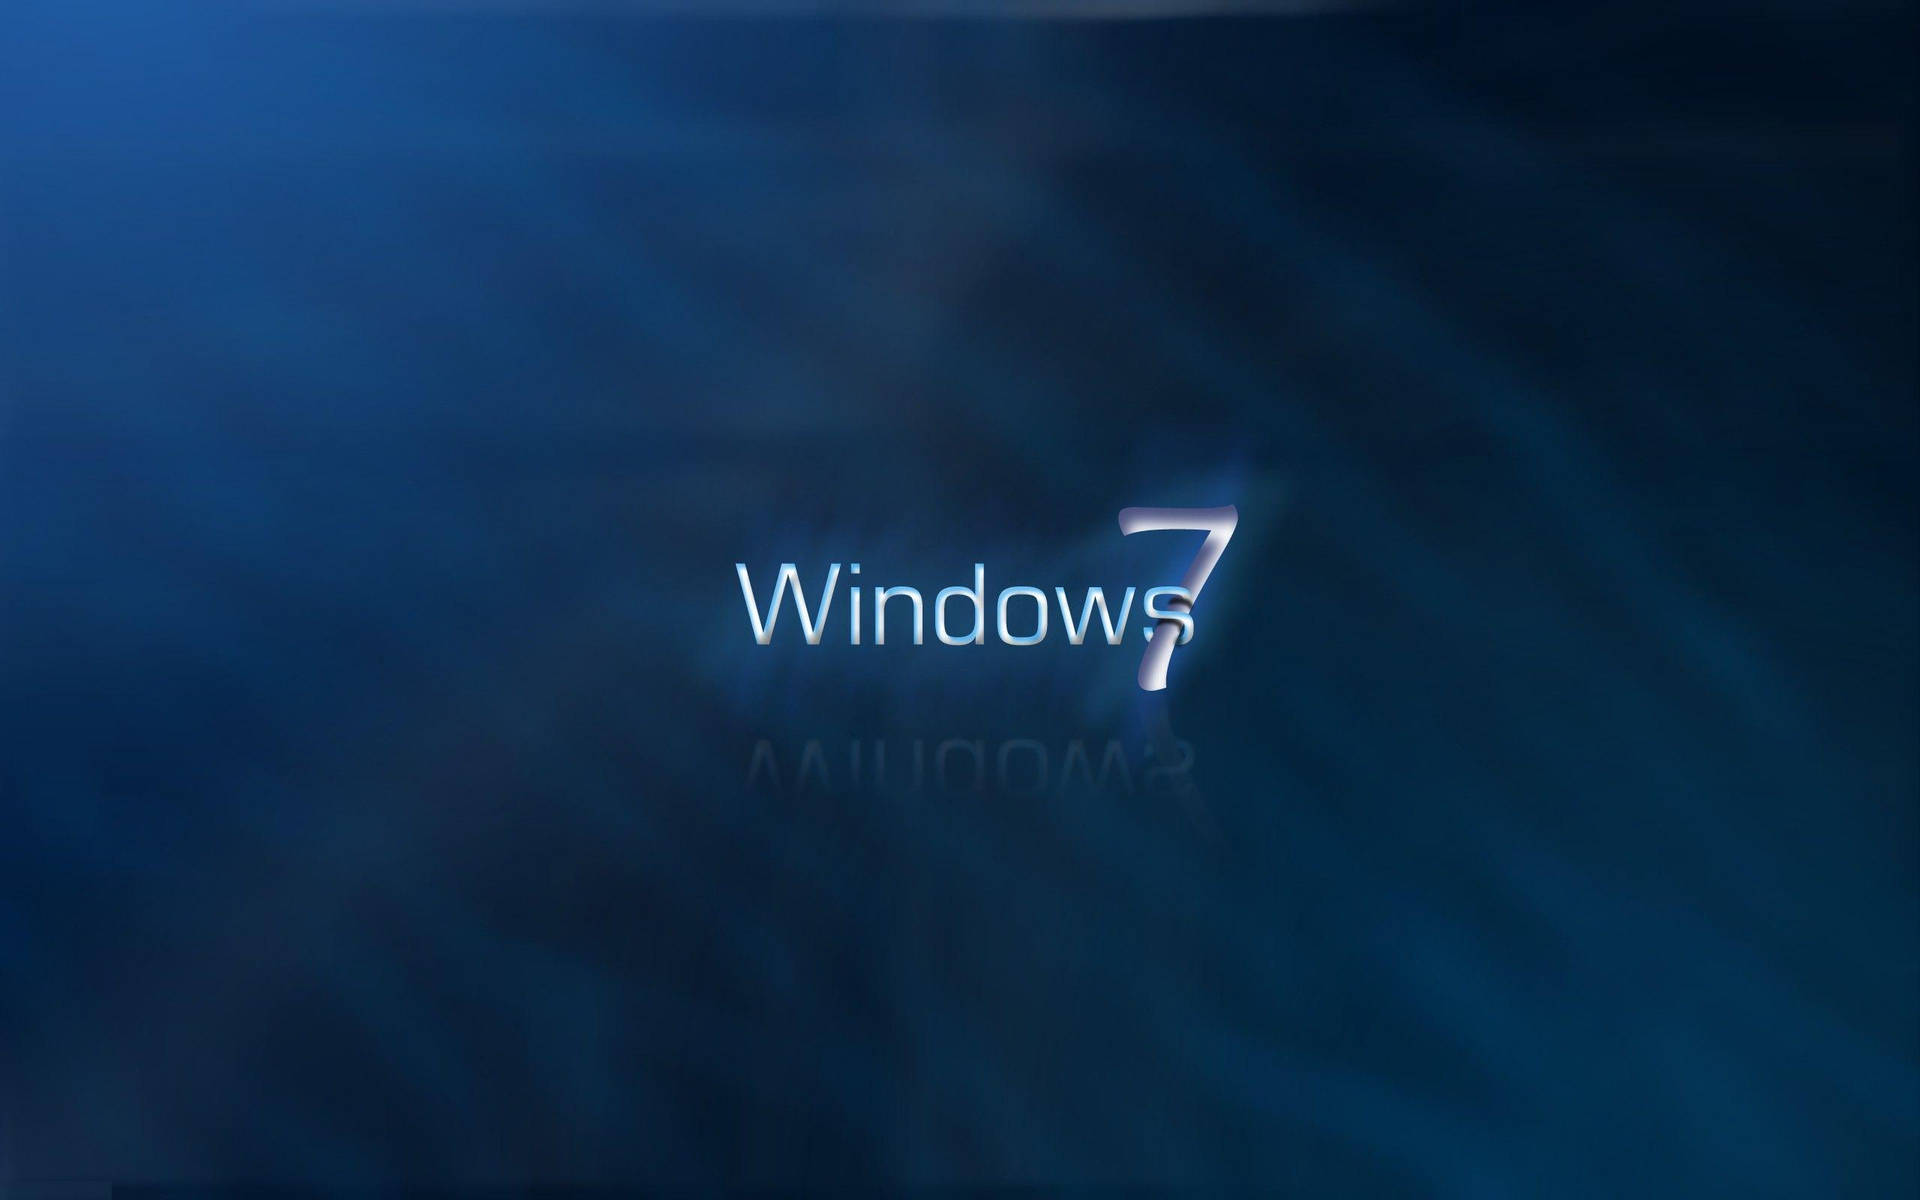 The Stunningly Stylish Windows 7 Dark Blue Desktop Wallpaper